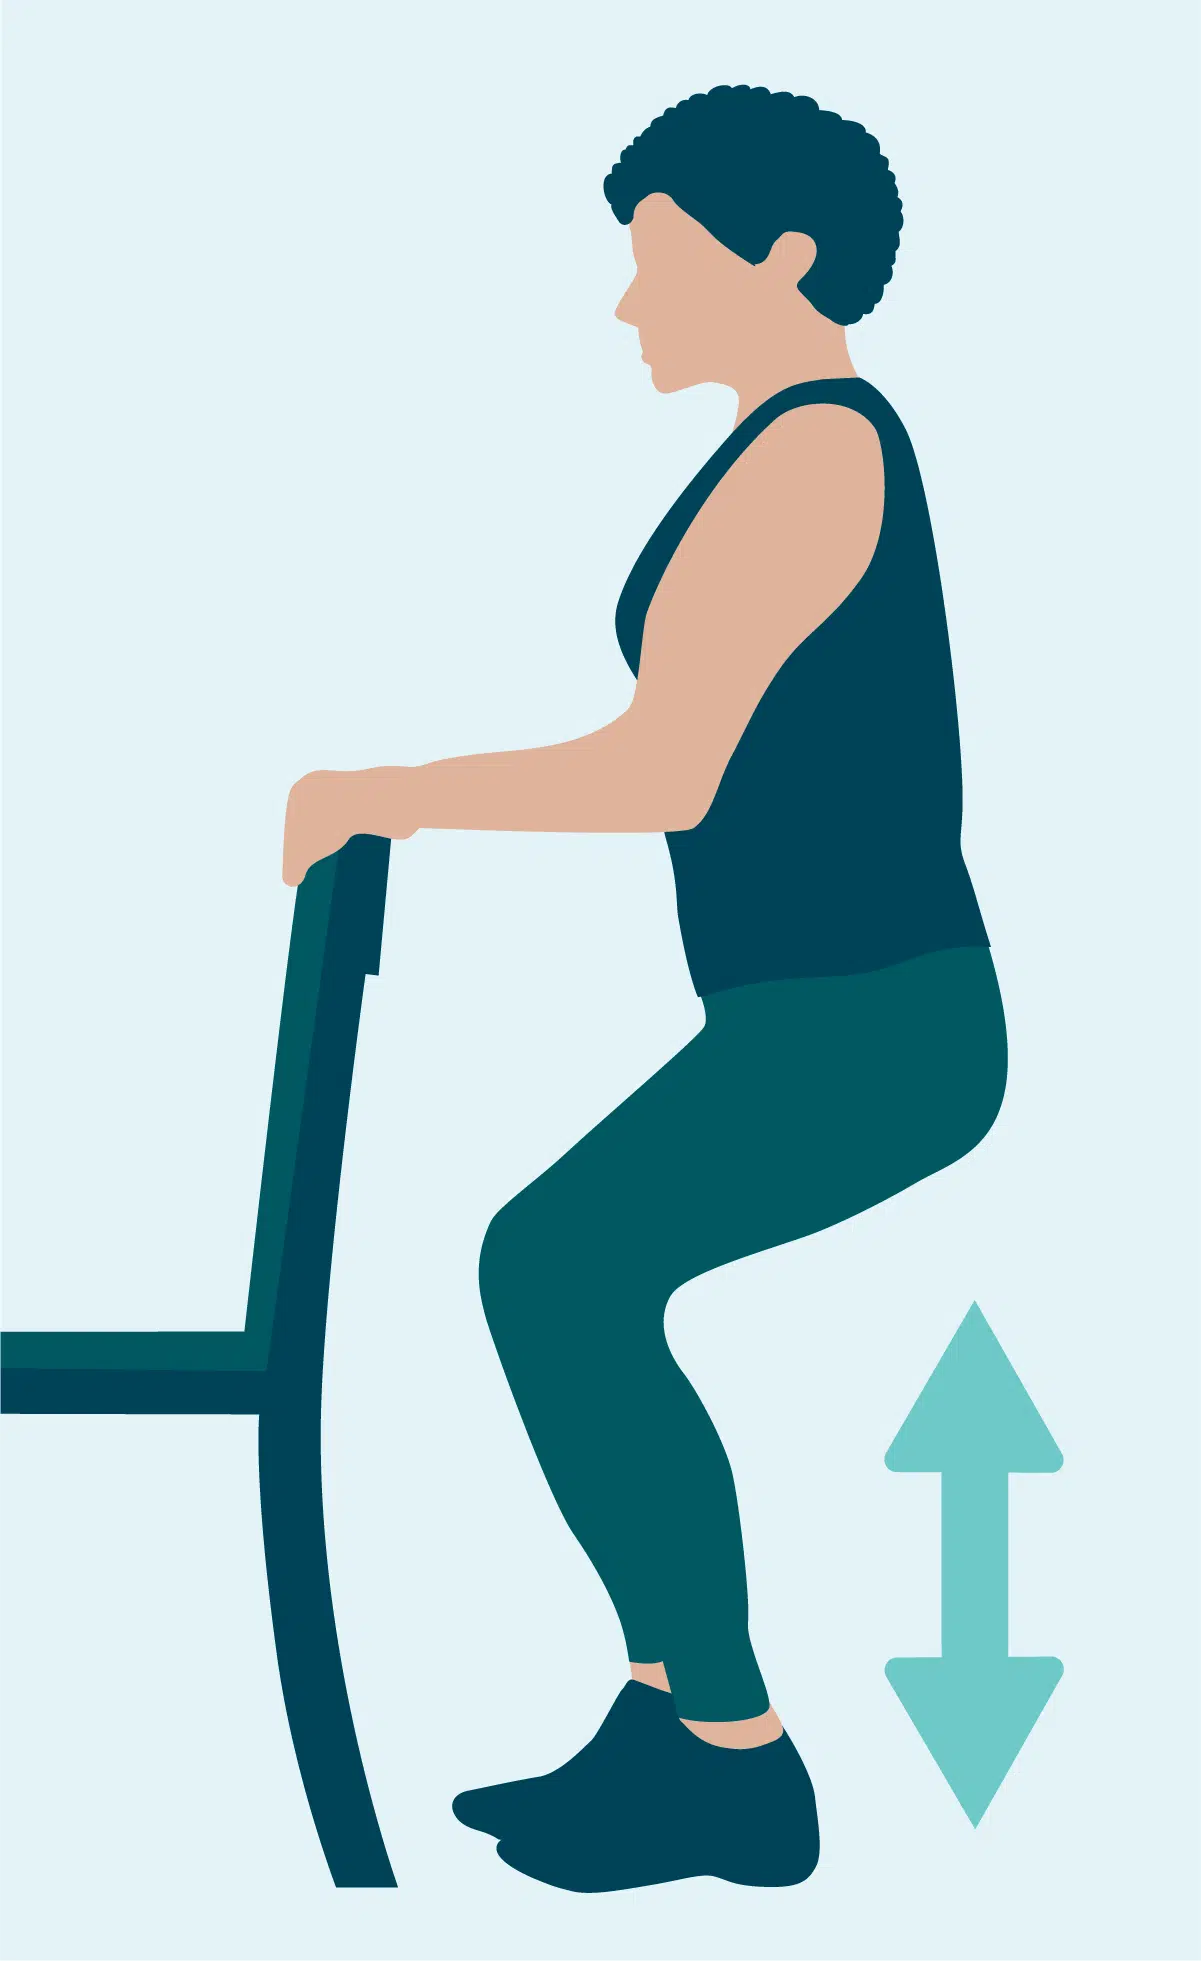 Mini-squats  Senior fitness, Daily exercise routines, Knee pain relief  exercises